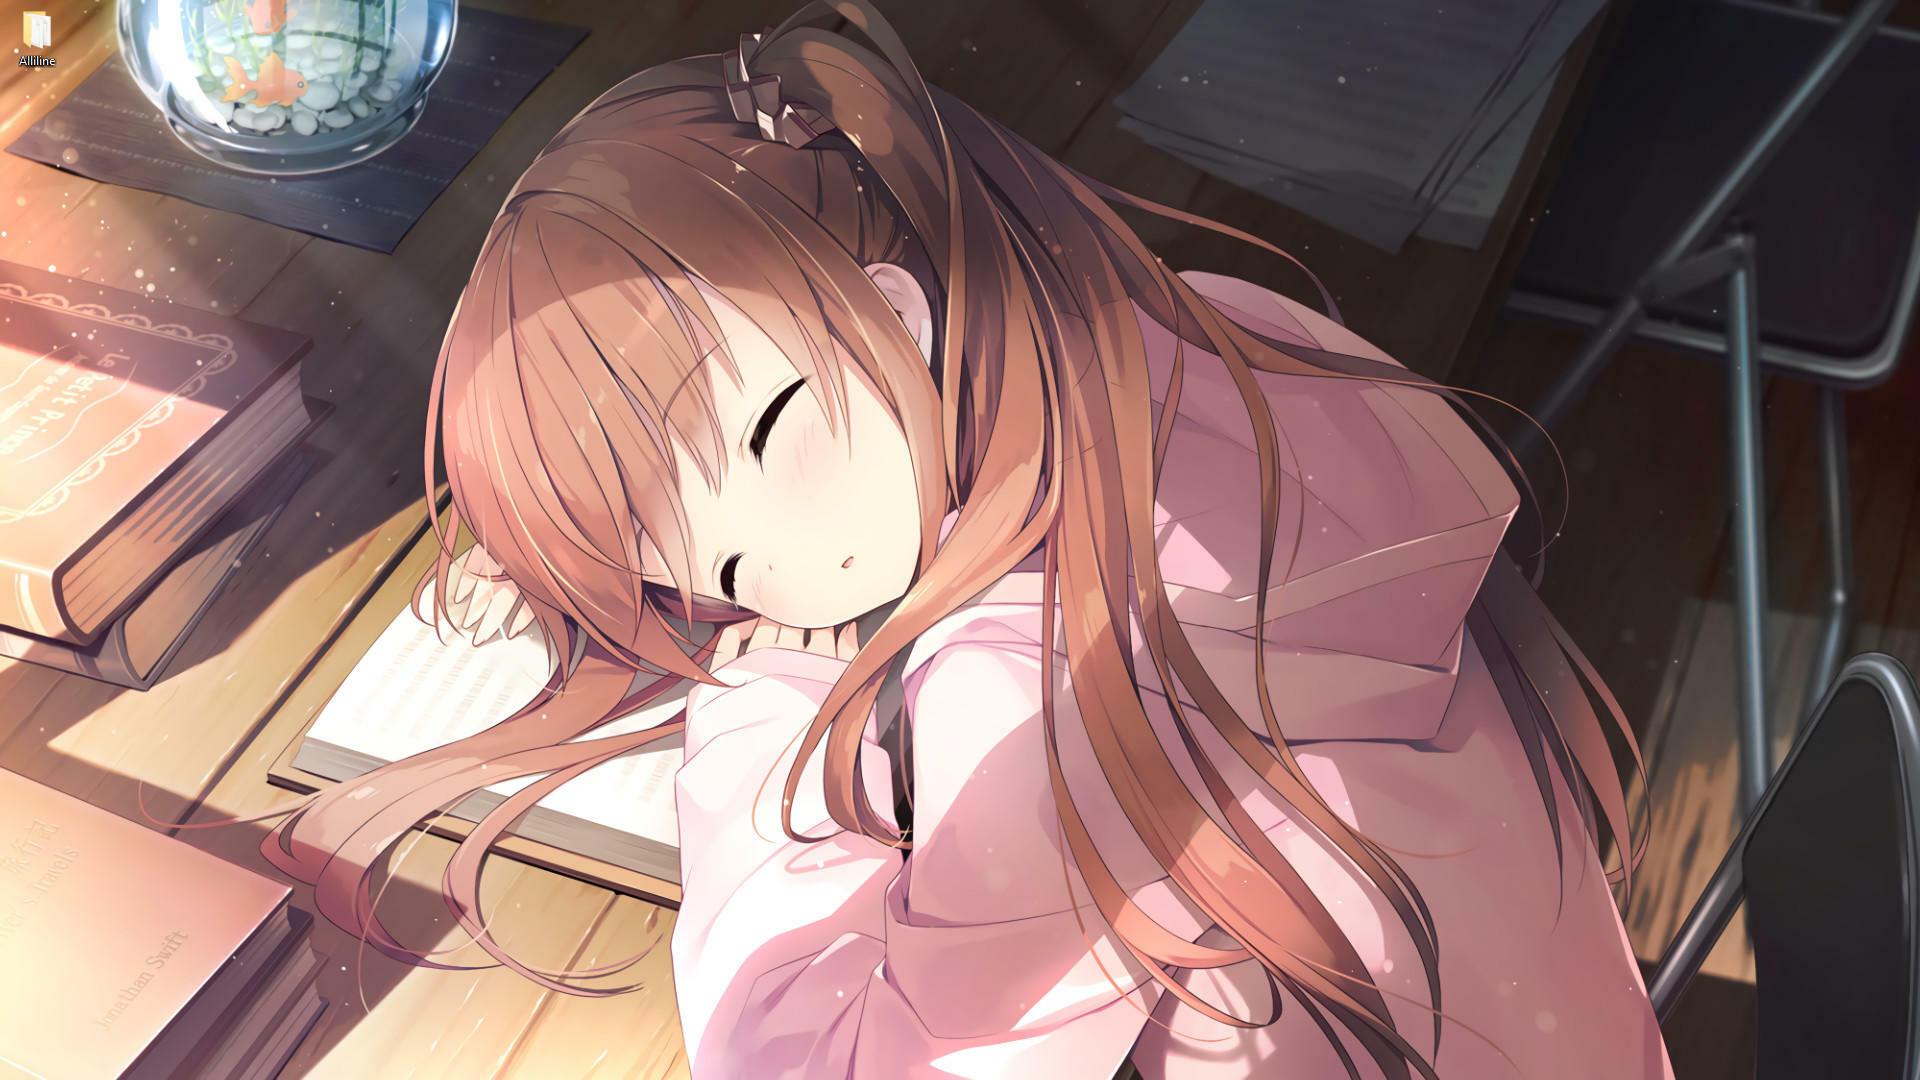 Sleeping Anime Girl Wallpapers Top Free Sleeping Anime Girl